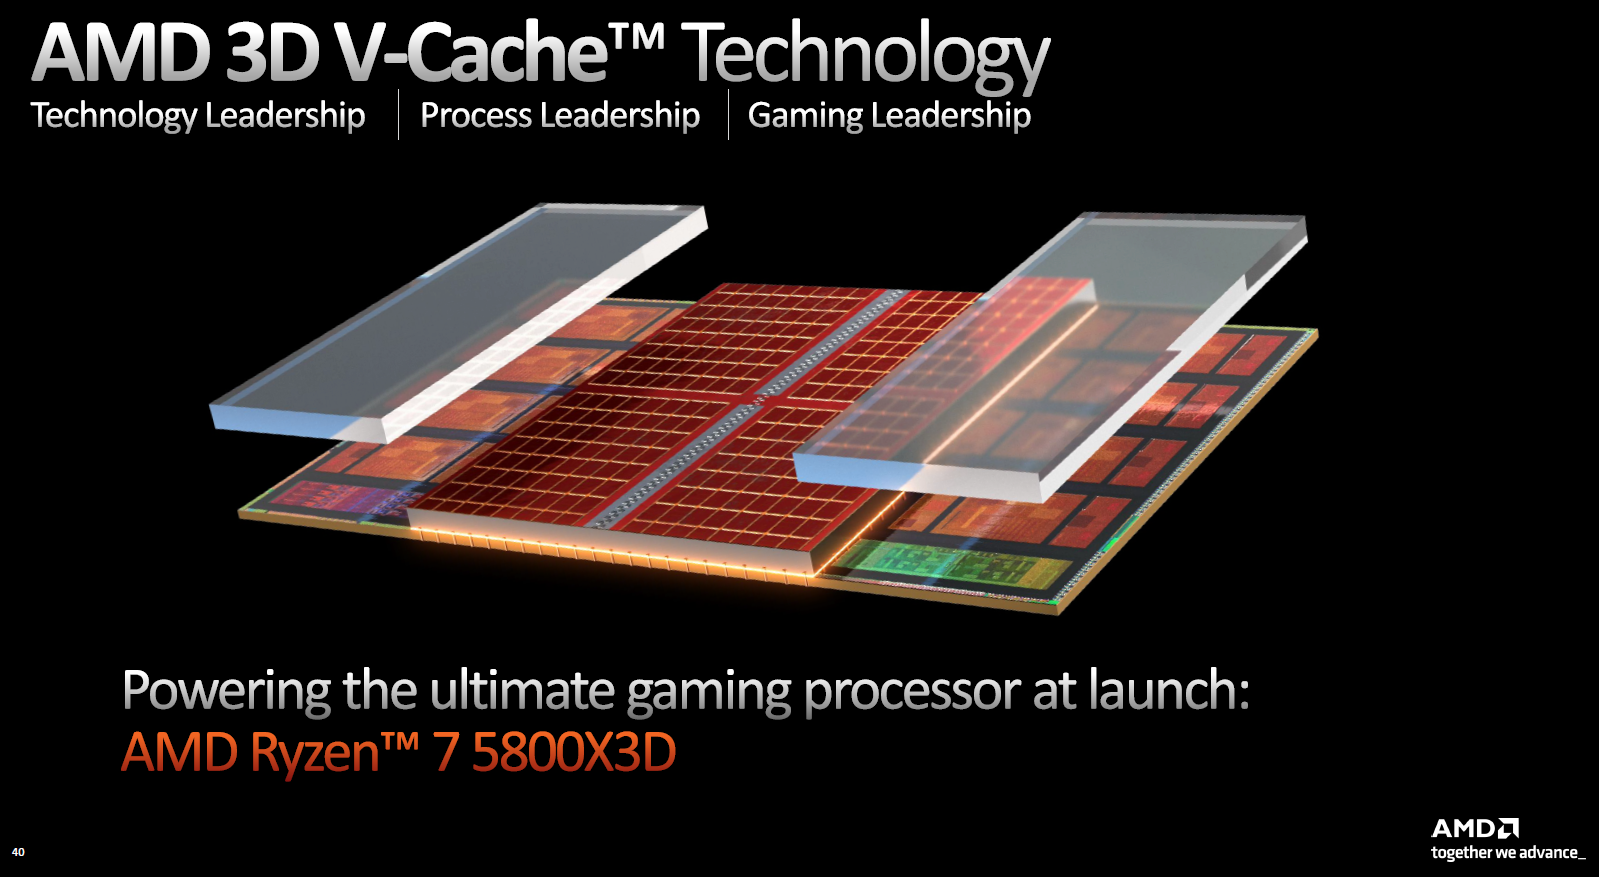 amd ryzen 7000 x3d slide 1 เอเอ็มดีเปิดตัวซีพียู AMD RYZEN 9 7950X3D 16C/32T ความเร็ว 5.7Ghz อัดแคช Cache มากถึง 144MB กันเลยทีเดียว  